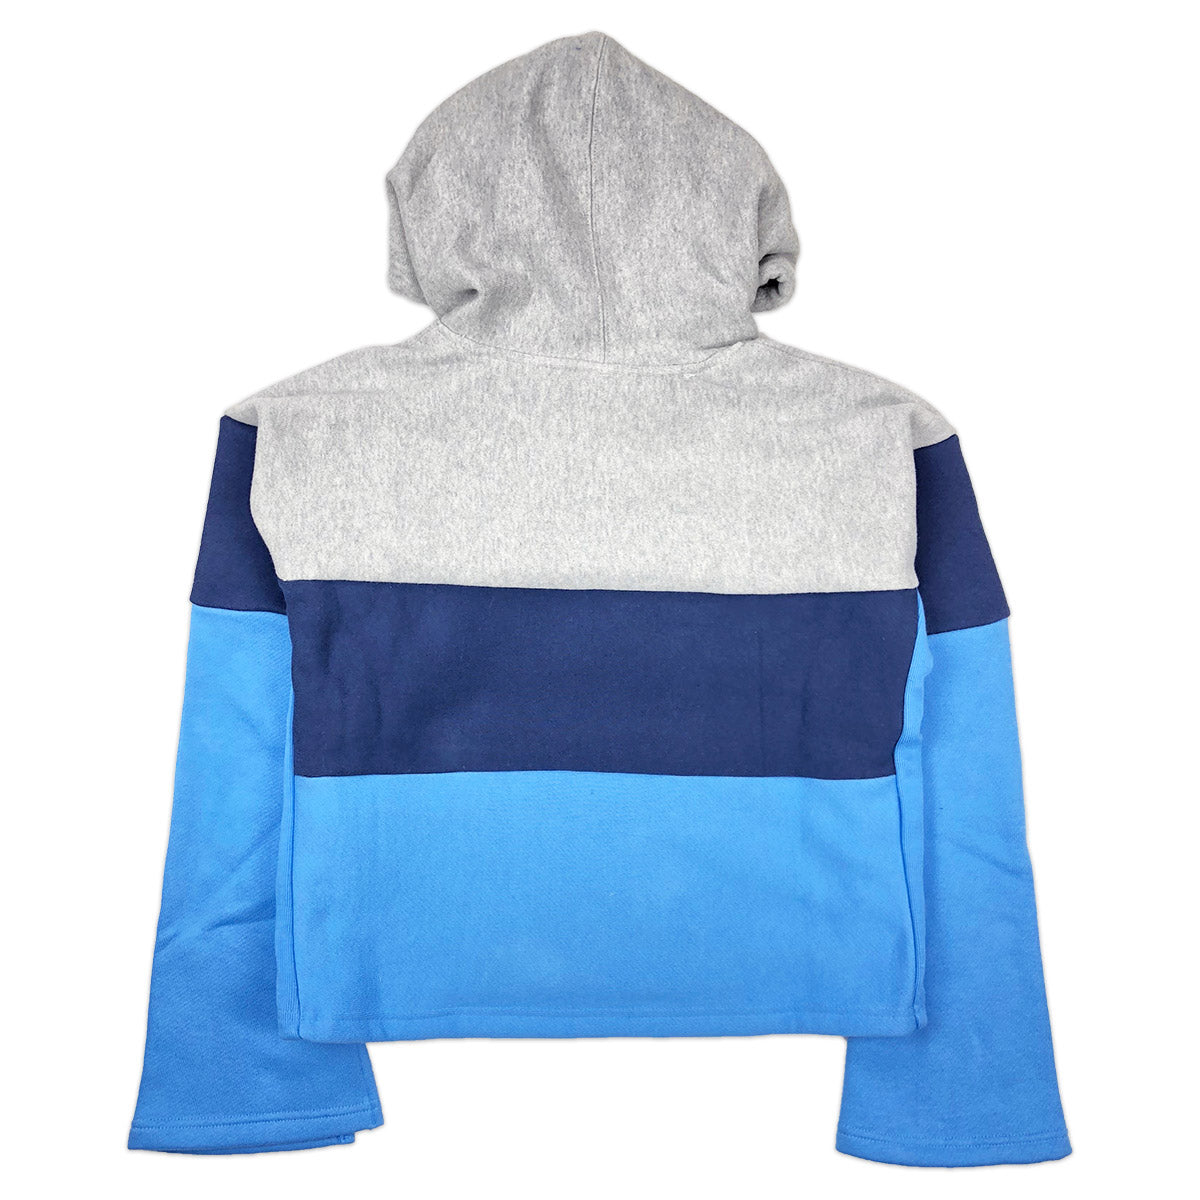 champion hoodie swiss blue